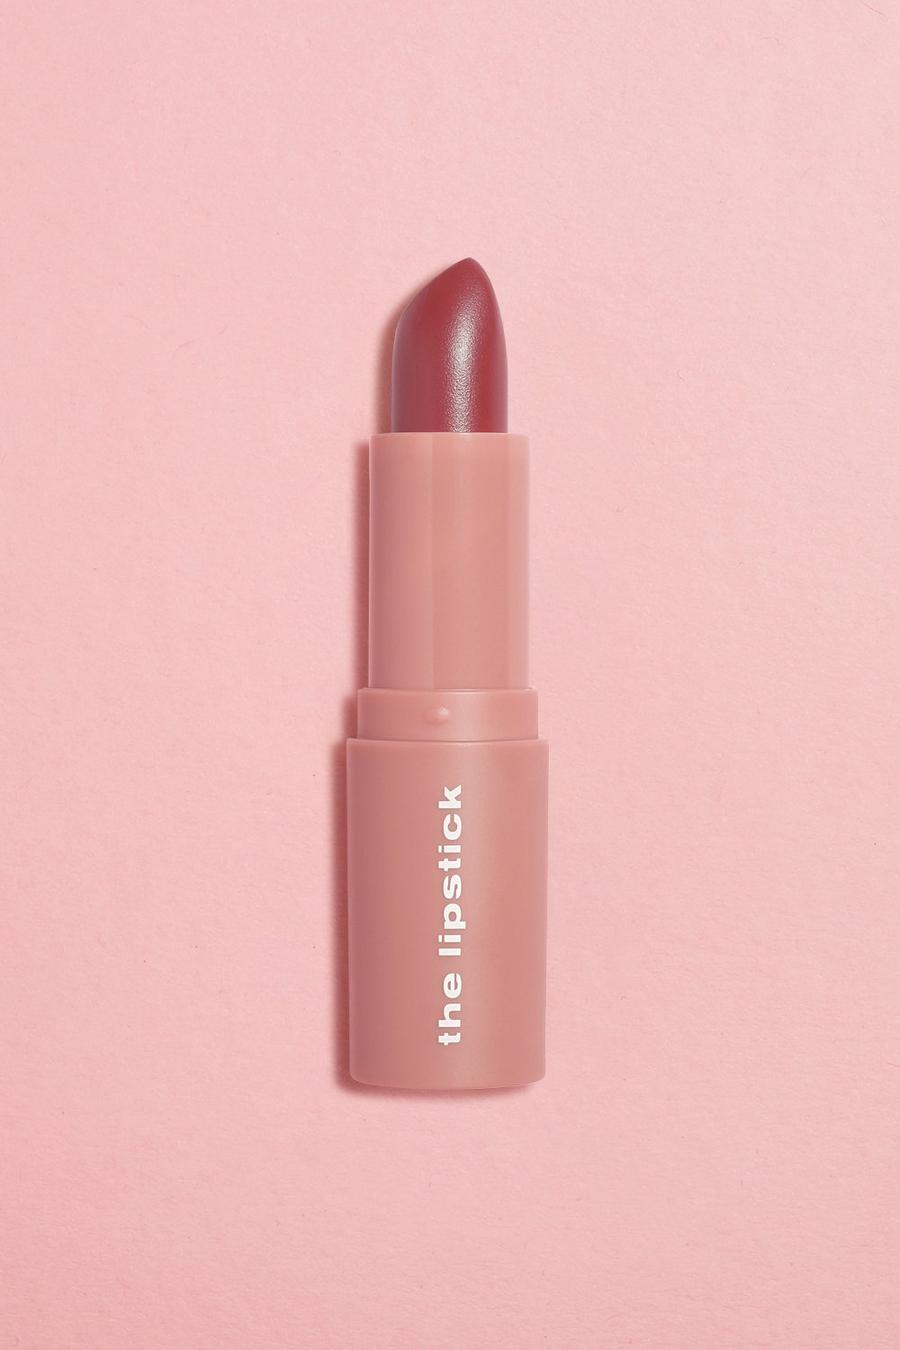 Boohoo Beauty 'The Lipstick' Lippenstift - Dark Pink